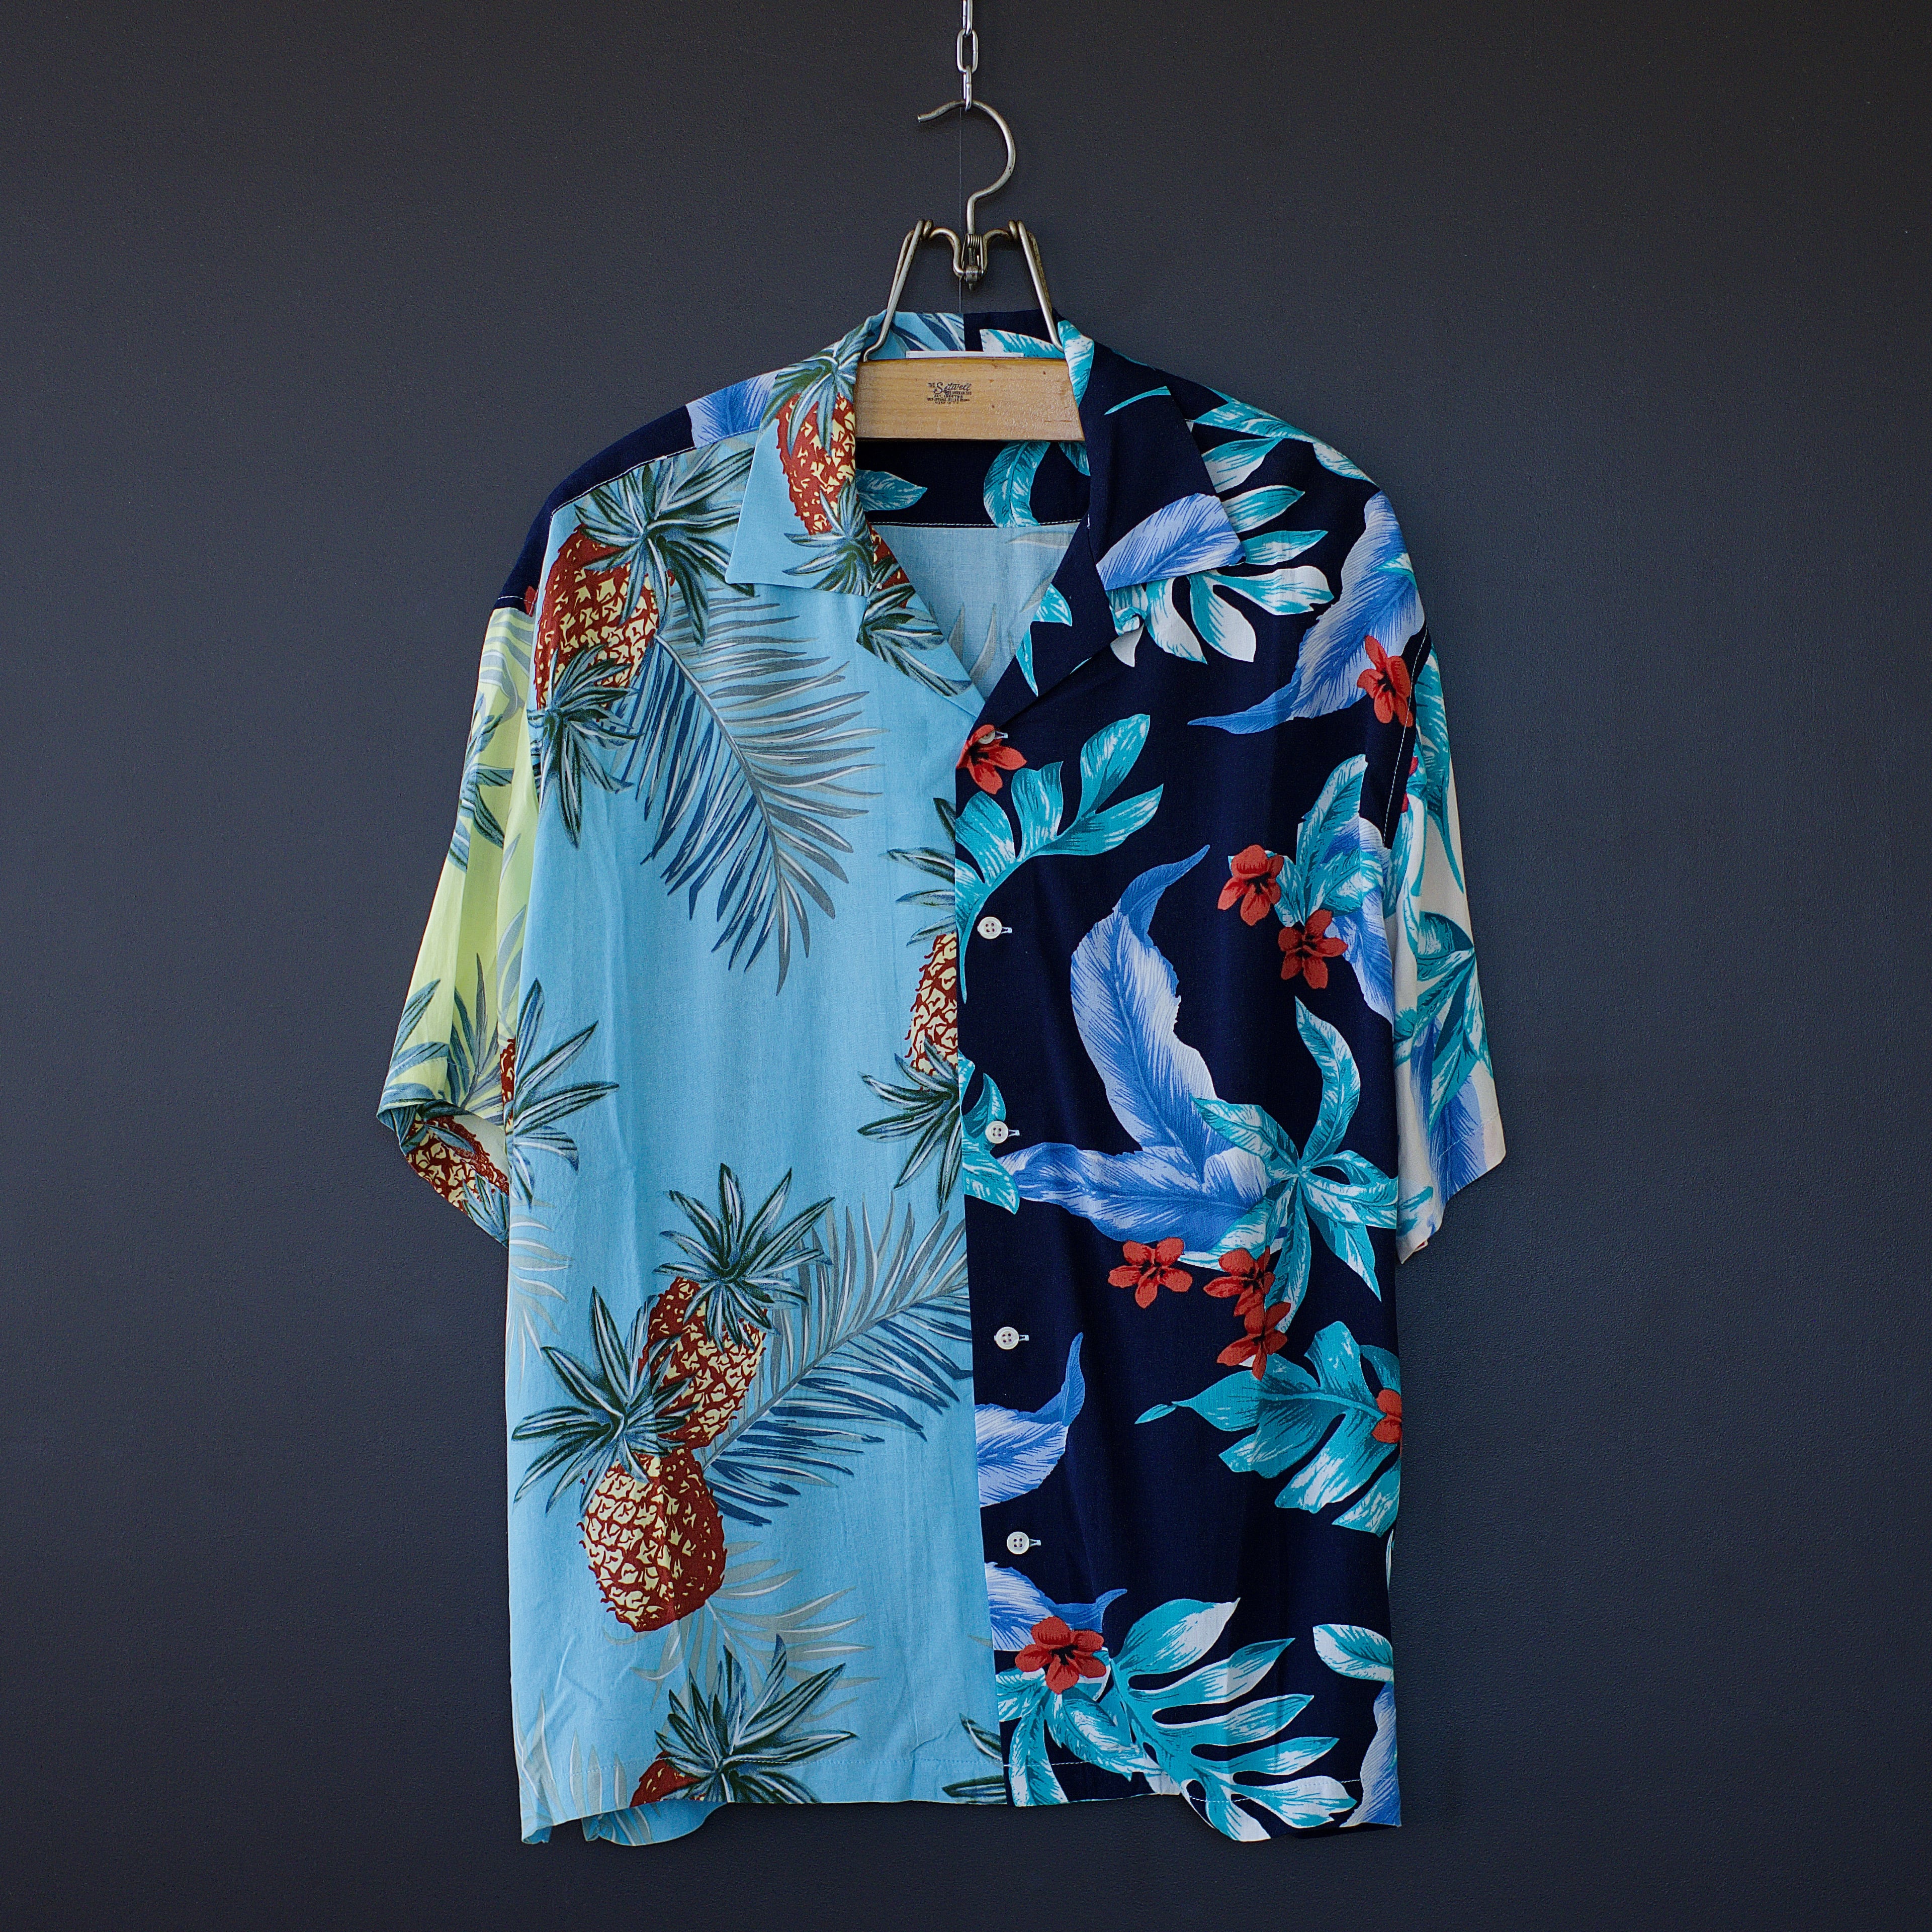 【Universal Style Wear】crazy pattern rayon aloha shirt dros dro